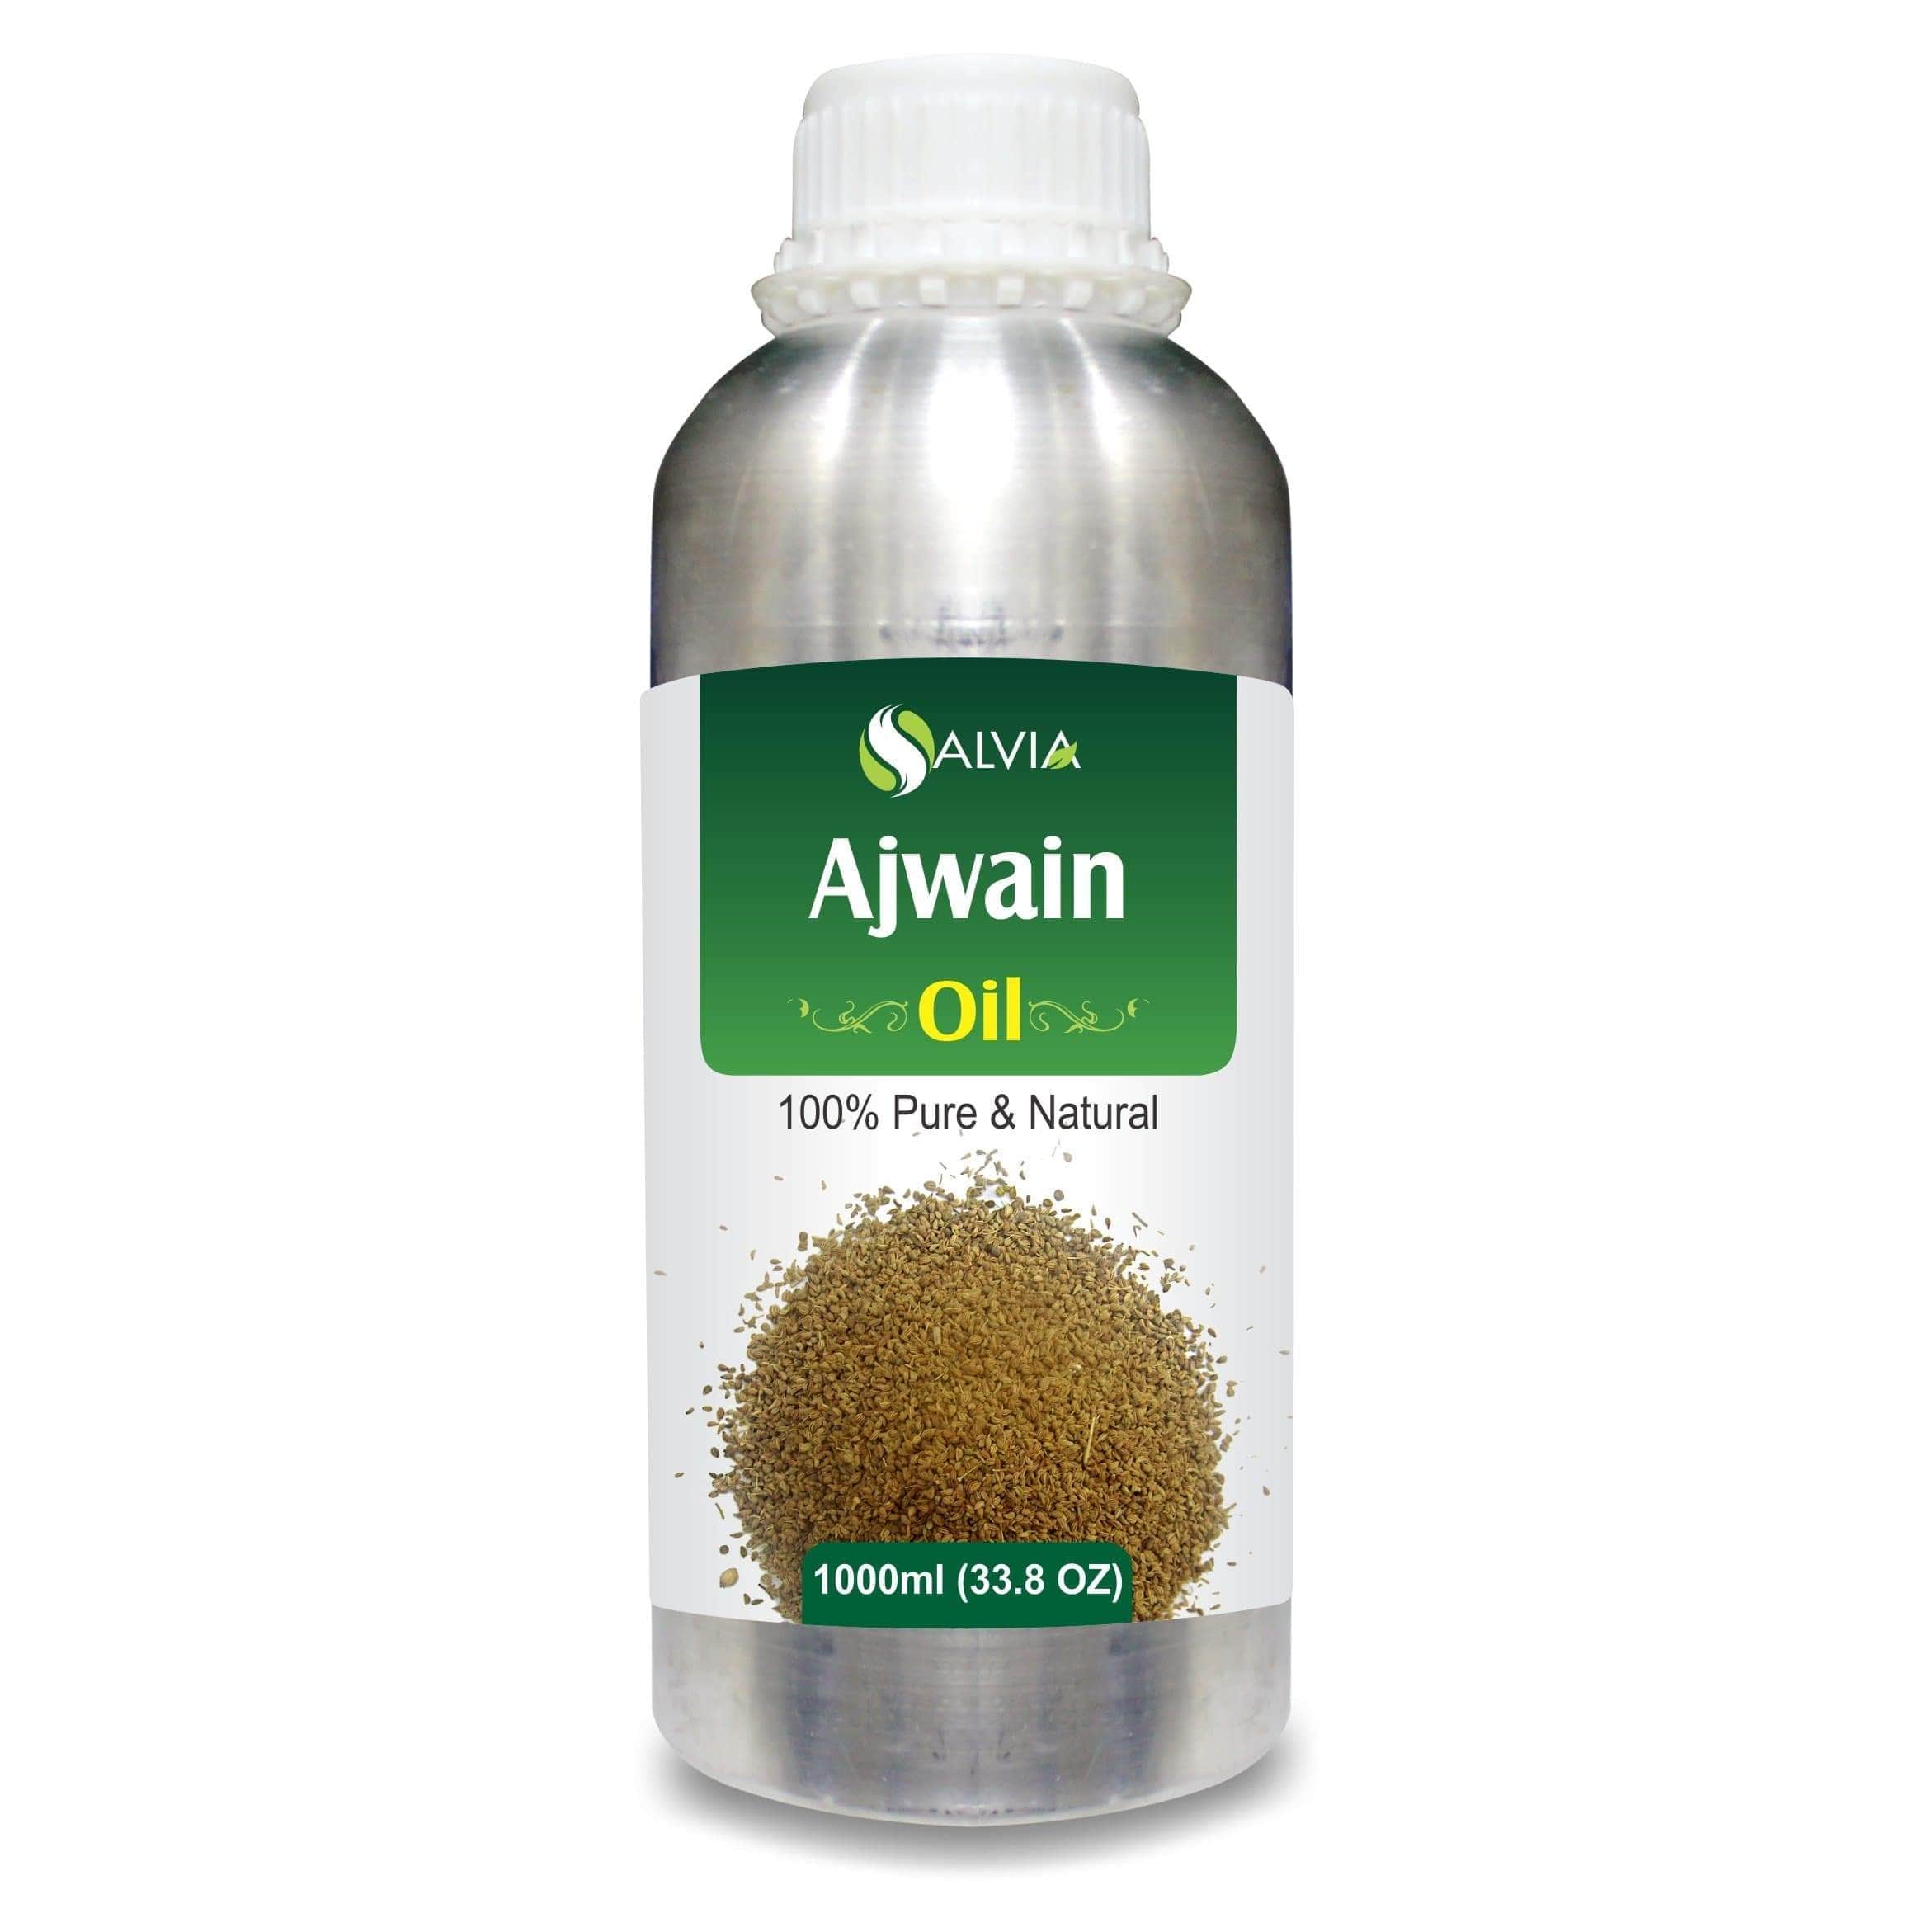 ajwain oil benefits in hindi